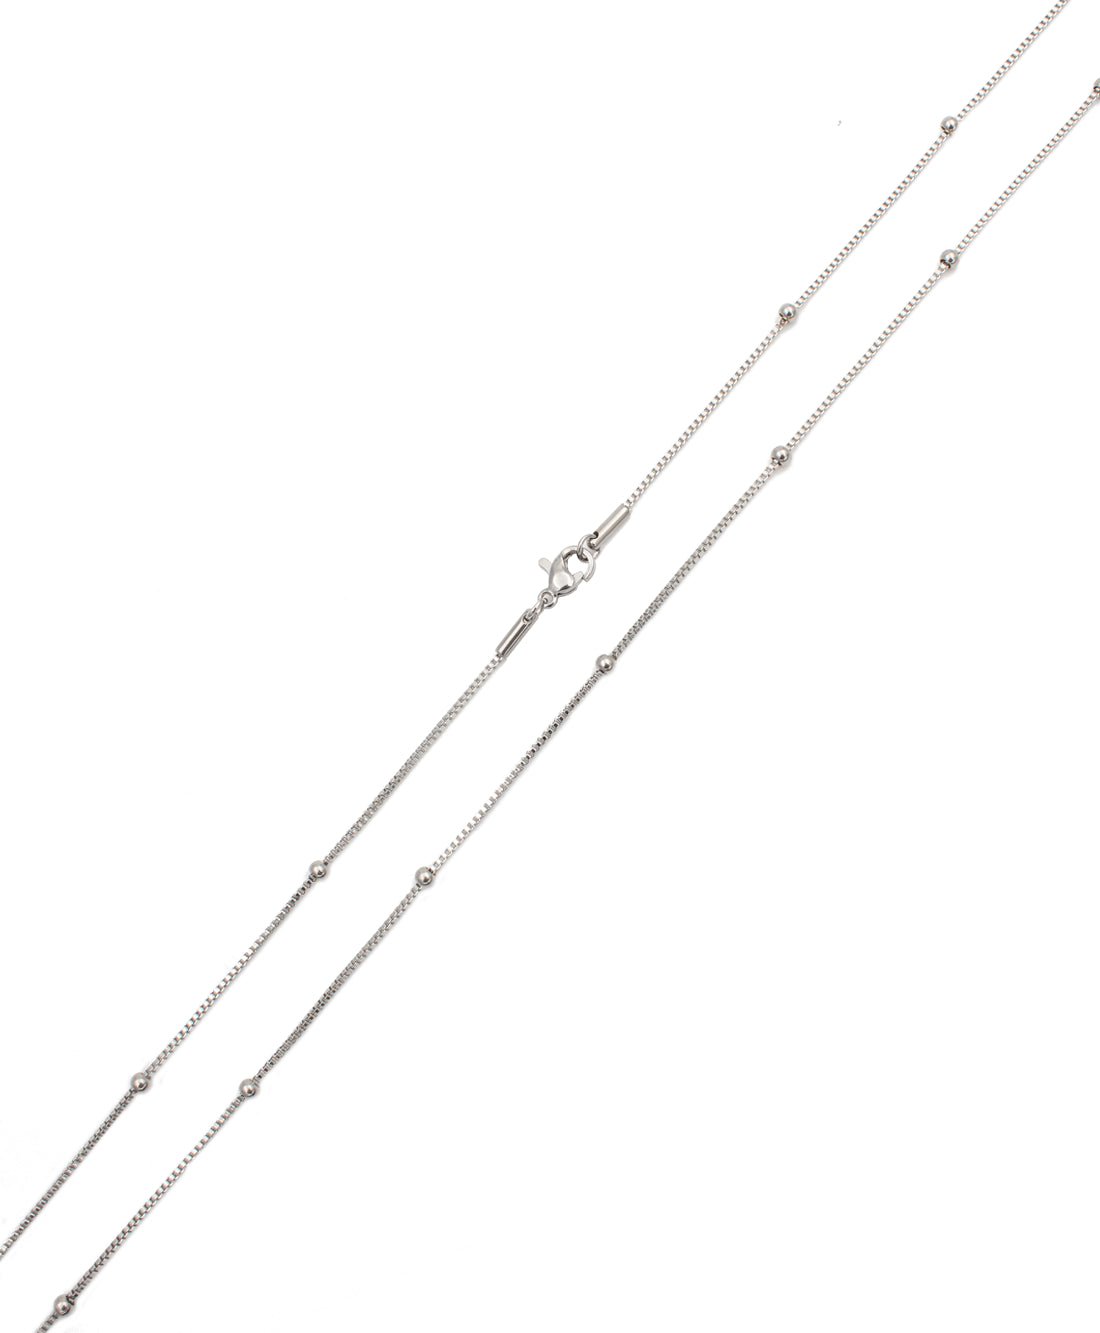 Long necklace / Necklace - Silver - Pregnancy bola 110cm